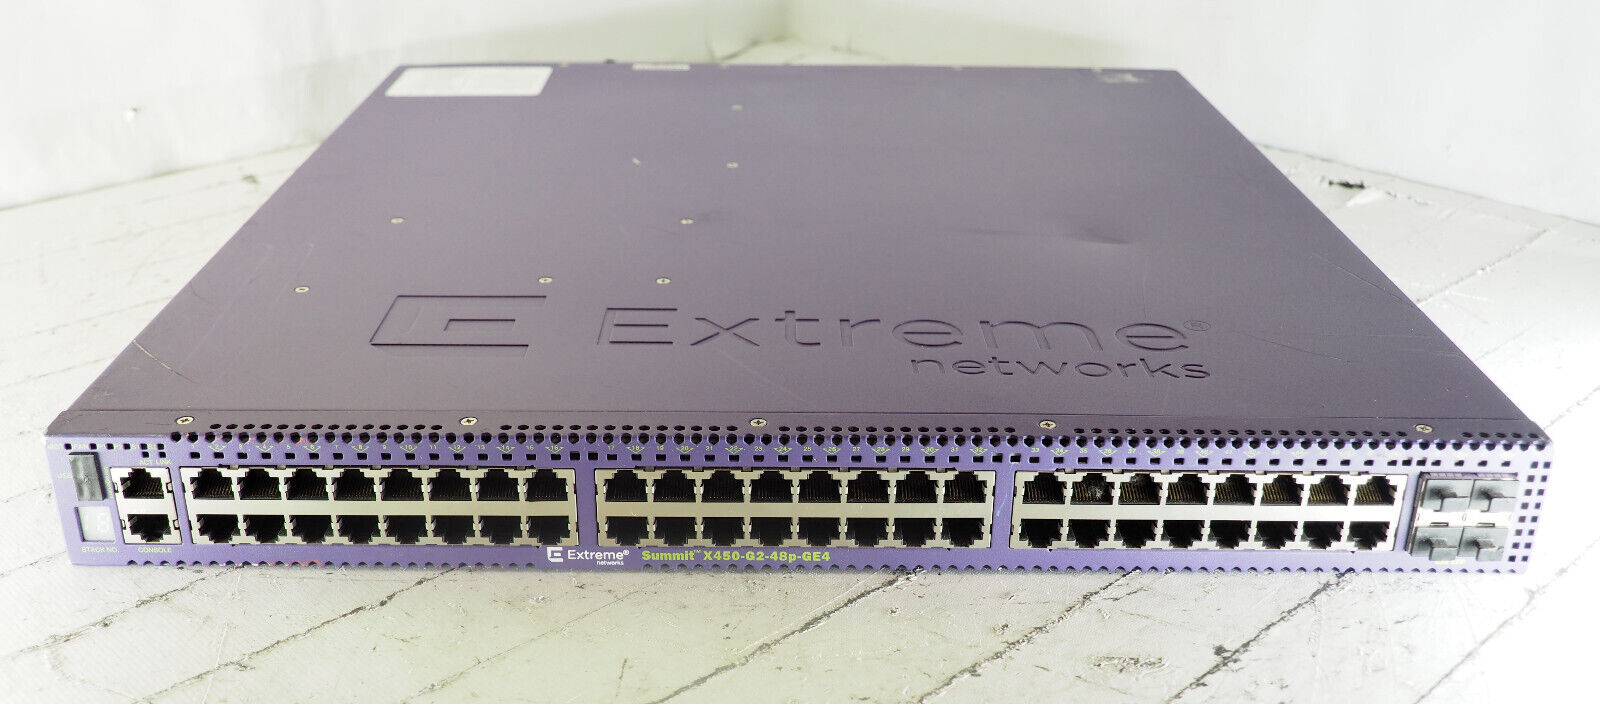 Extreme 16175 X450-G2-48p-GE4-Base Switch 48-Port Gigabit PoE SFP+